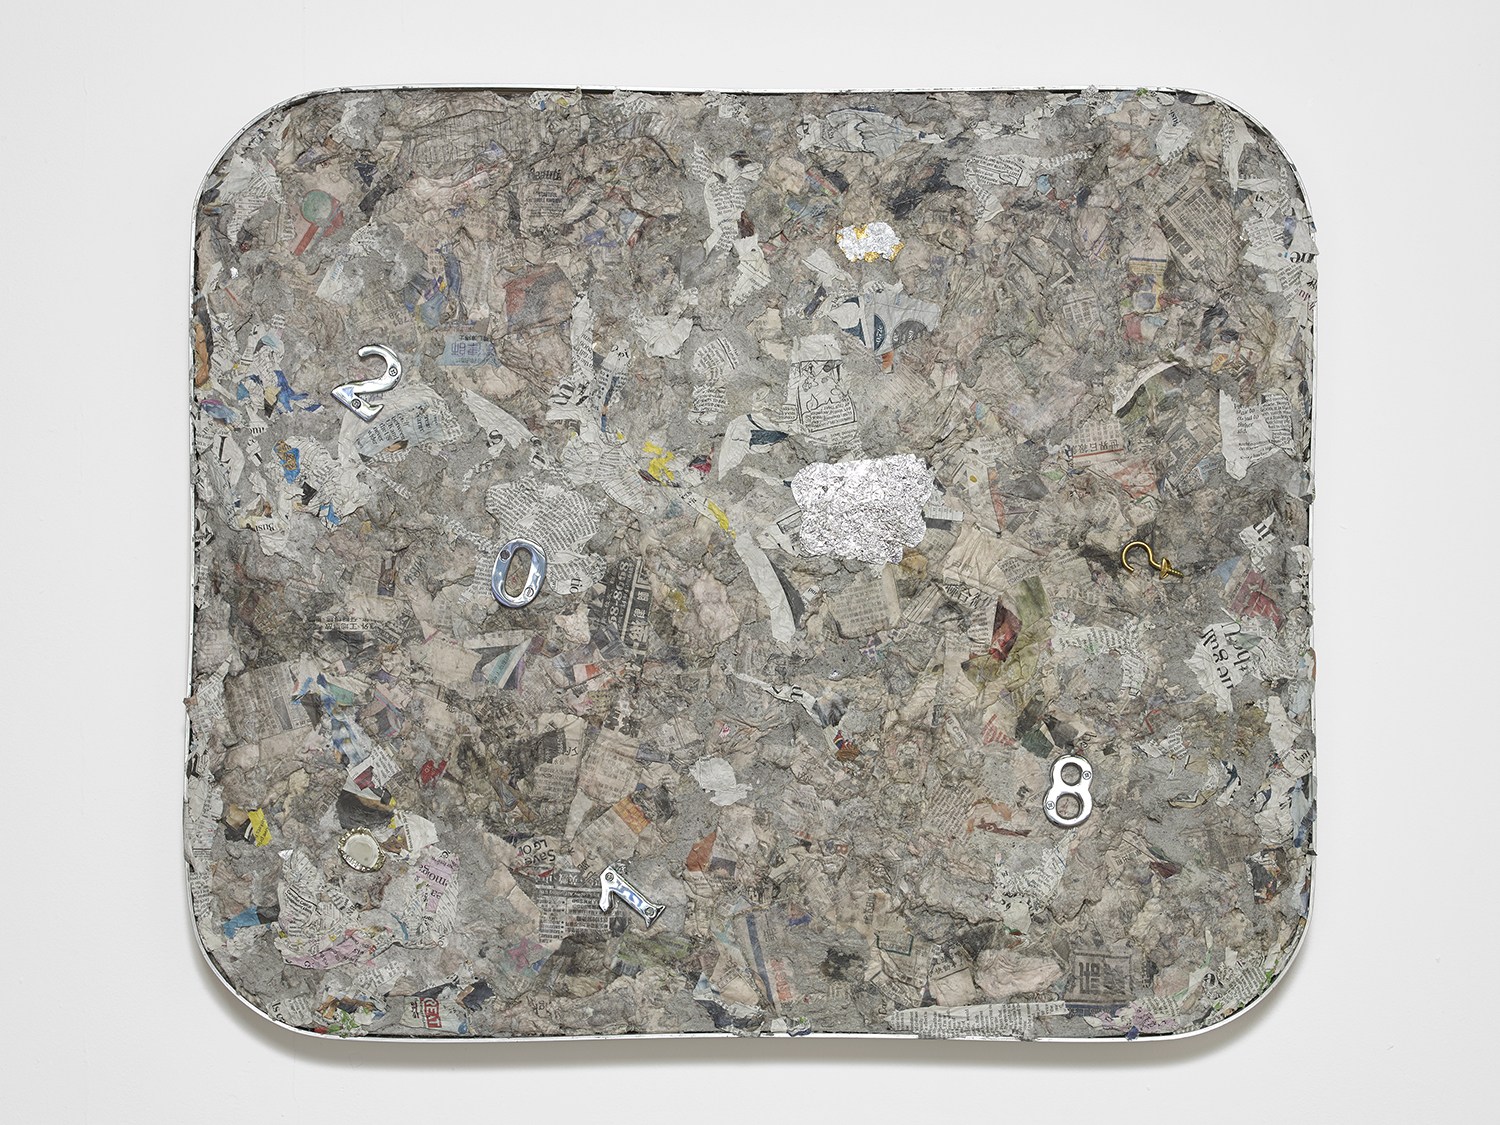  Liz Craft,  2000 Something , 2018, Papier-mache, mixed media, aluminum, wood, 67.3 x 80 x 5 cm / 26.5 x 31.5 x 2 in 